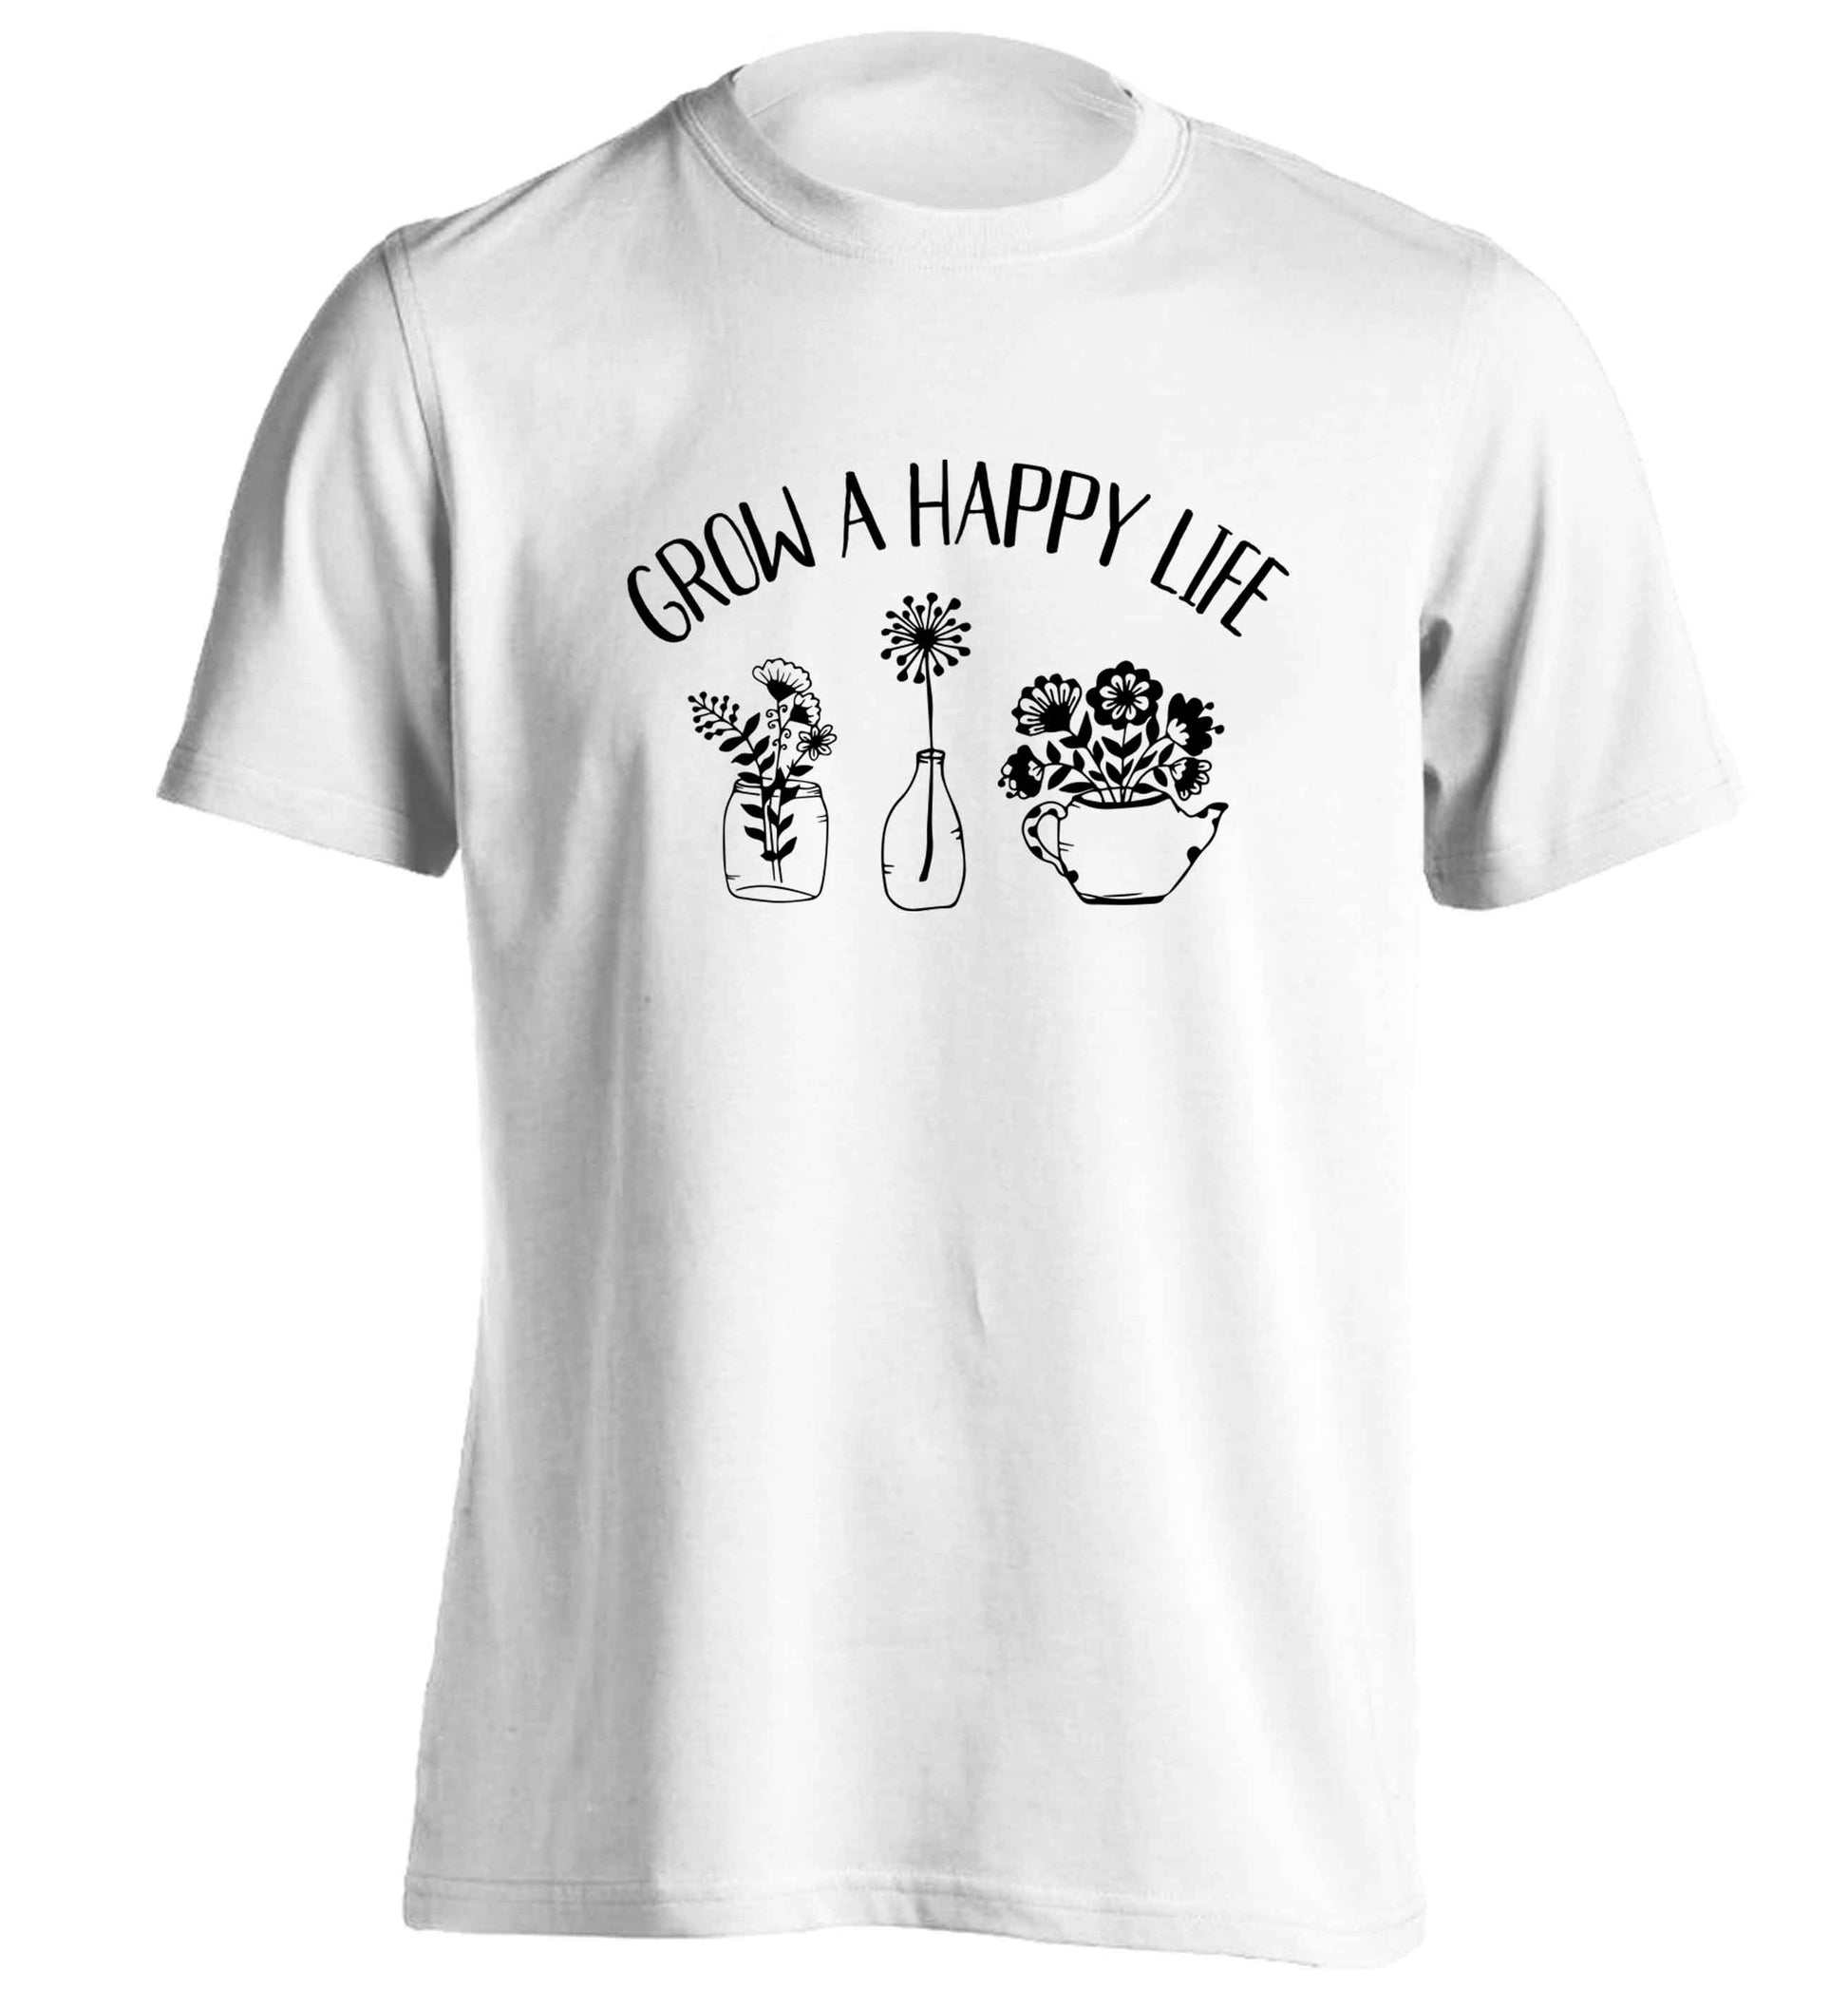 Grow a happy life adults unisex white Tshirt 2XL